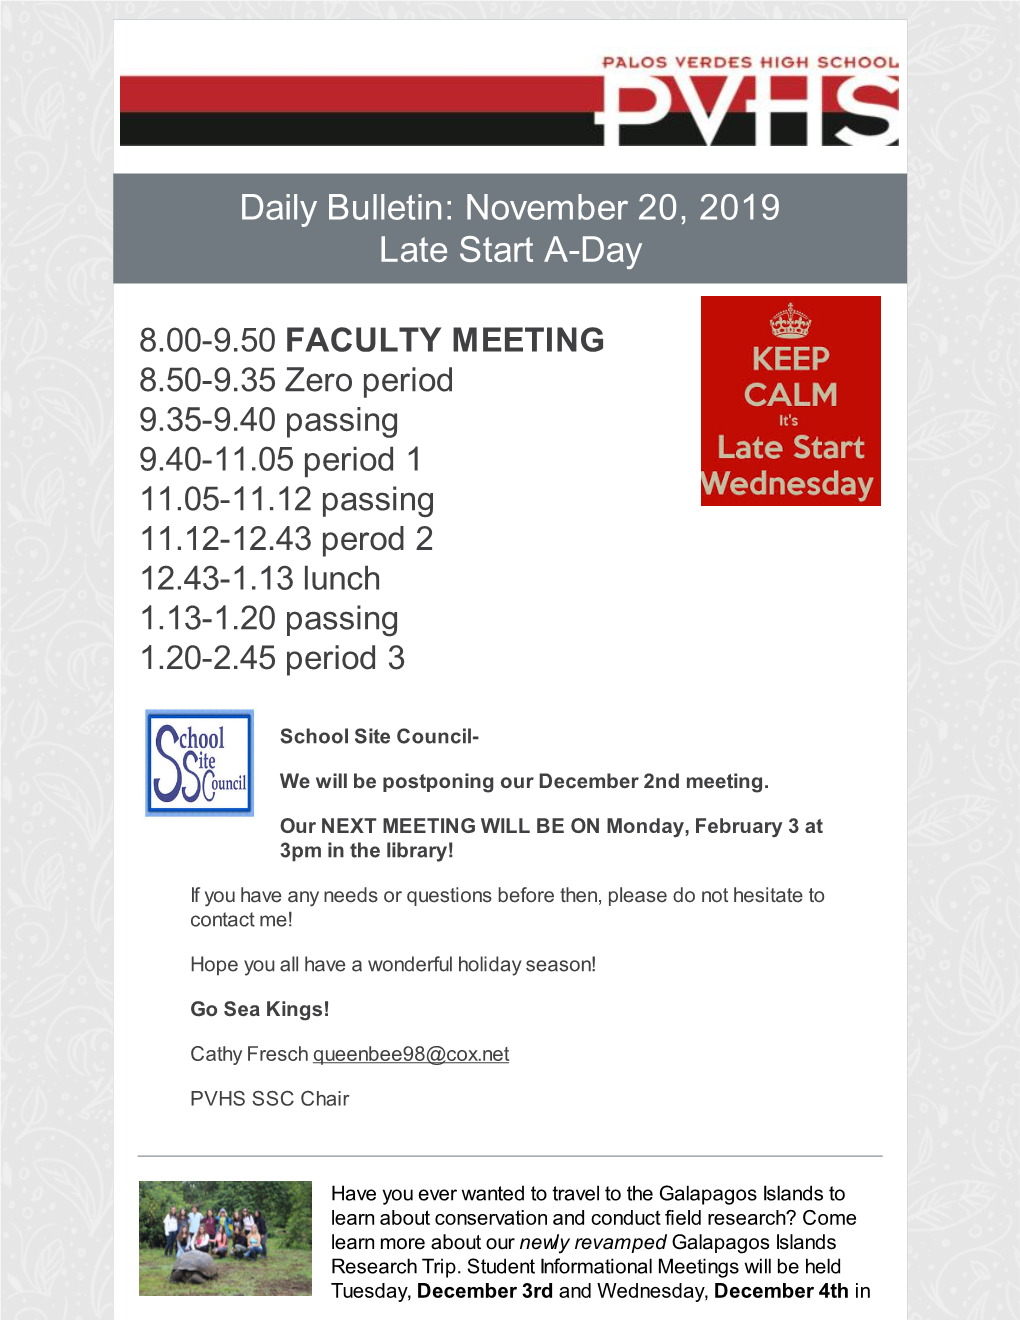 Daily Bulletin: November 20, 2019 Late Start A-Day